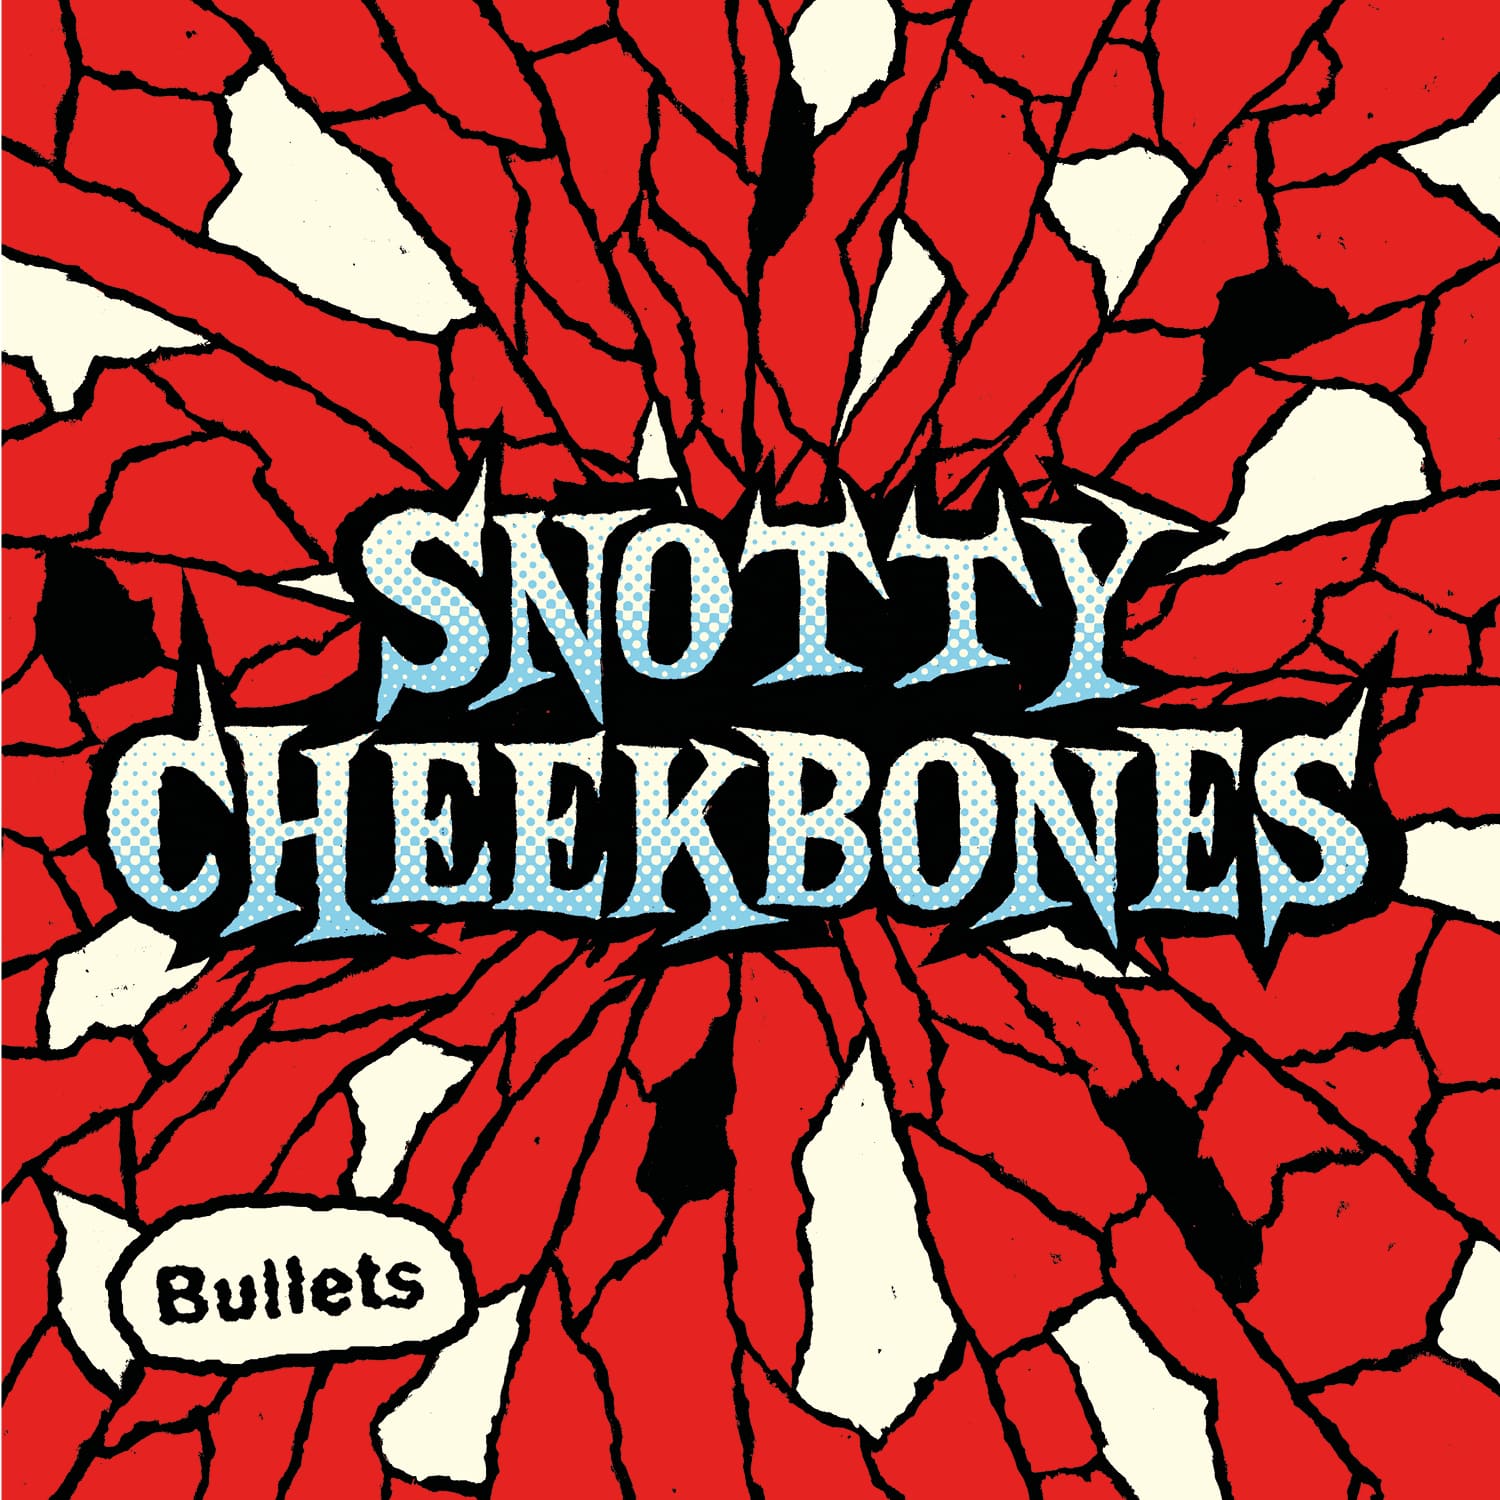 Snotty Cheekbones - Bullets